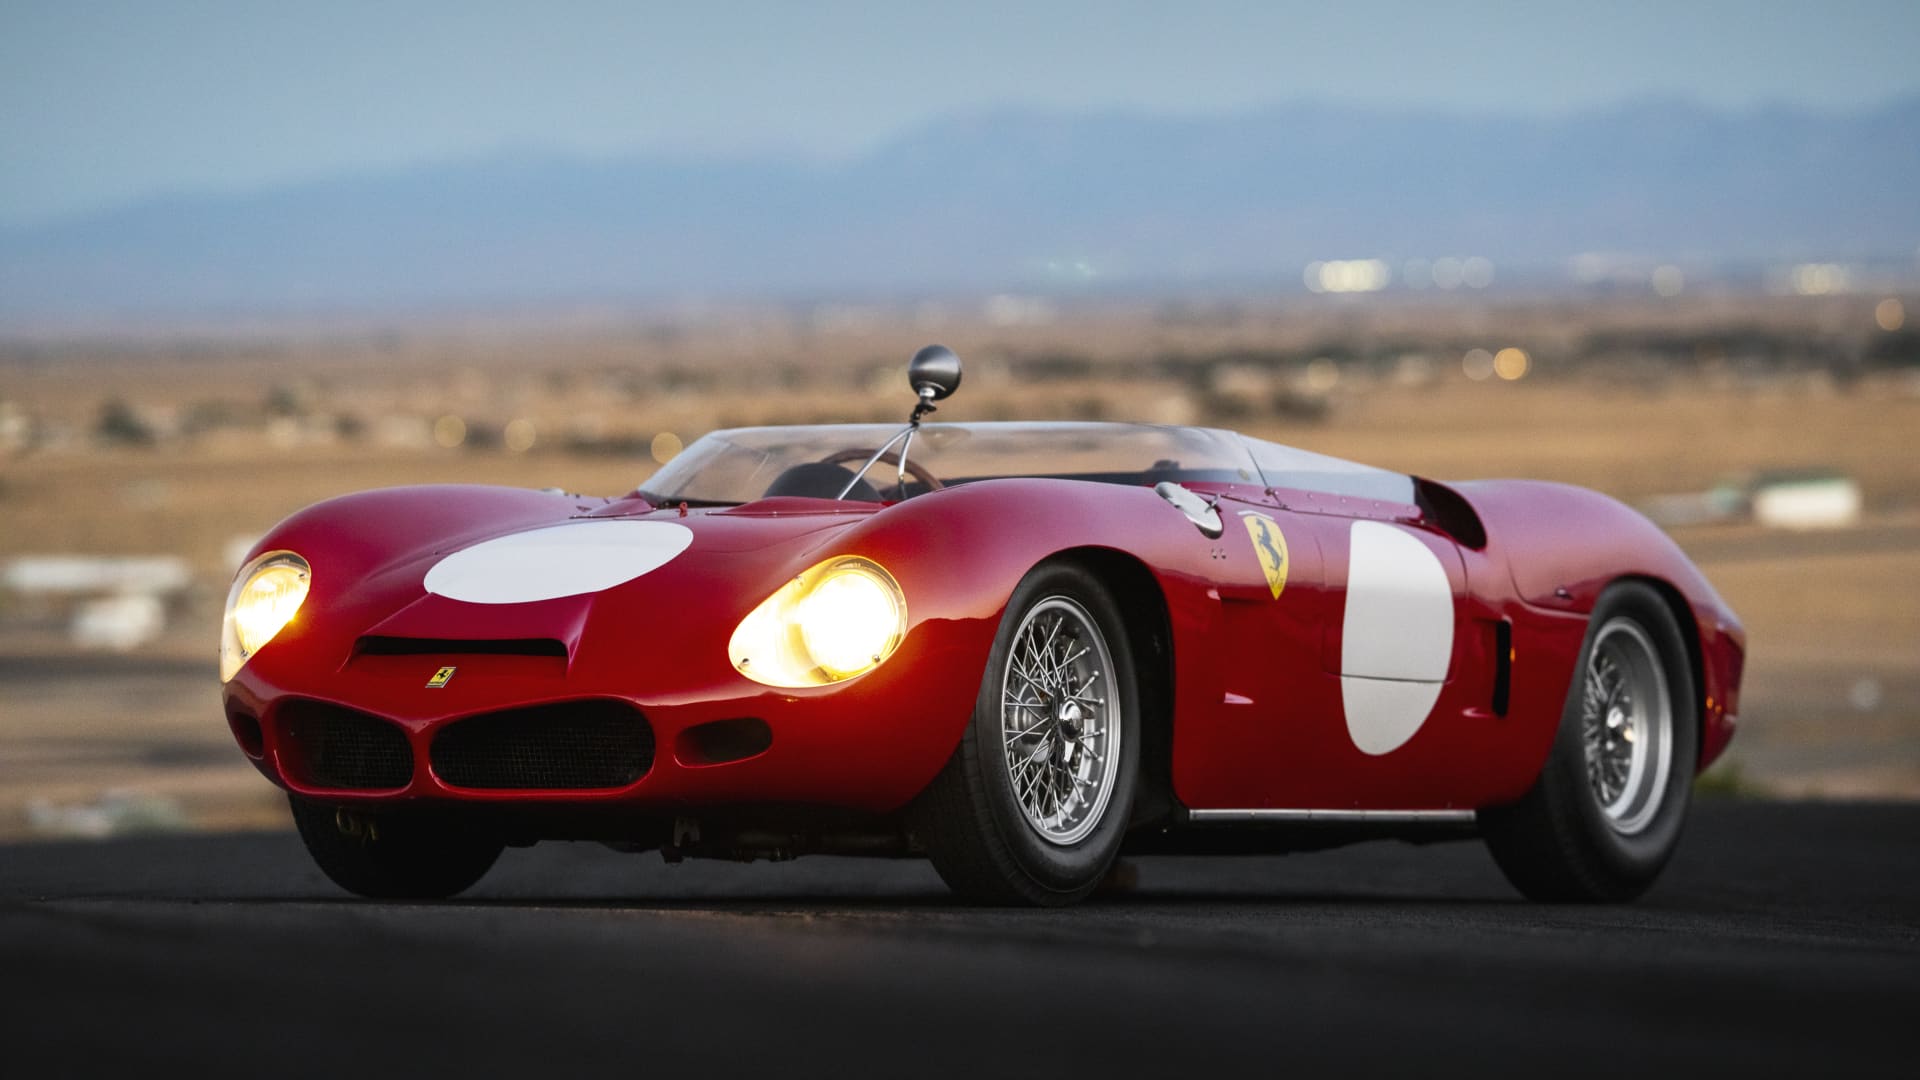 1962 Ferrari 268 SP